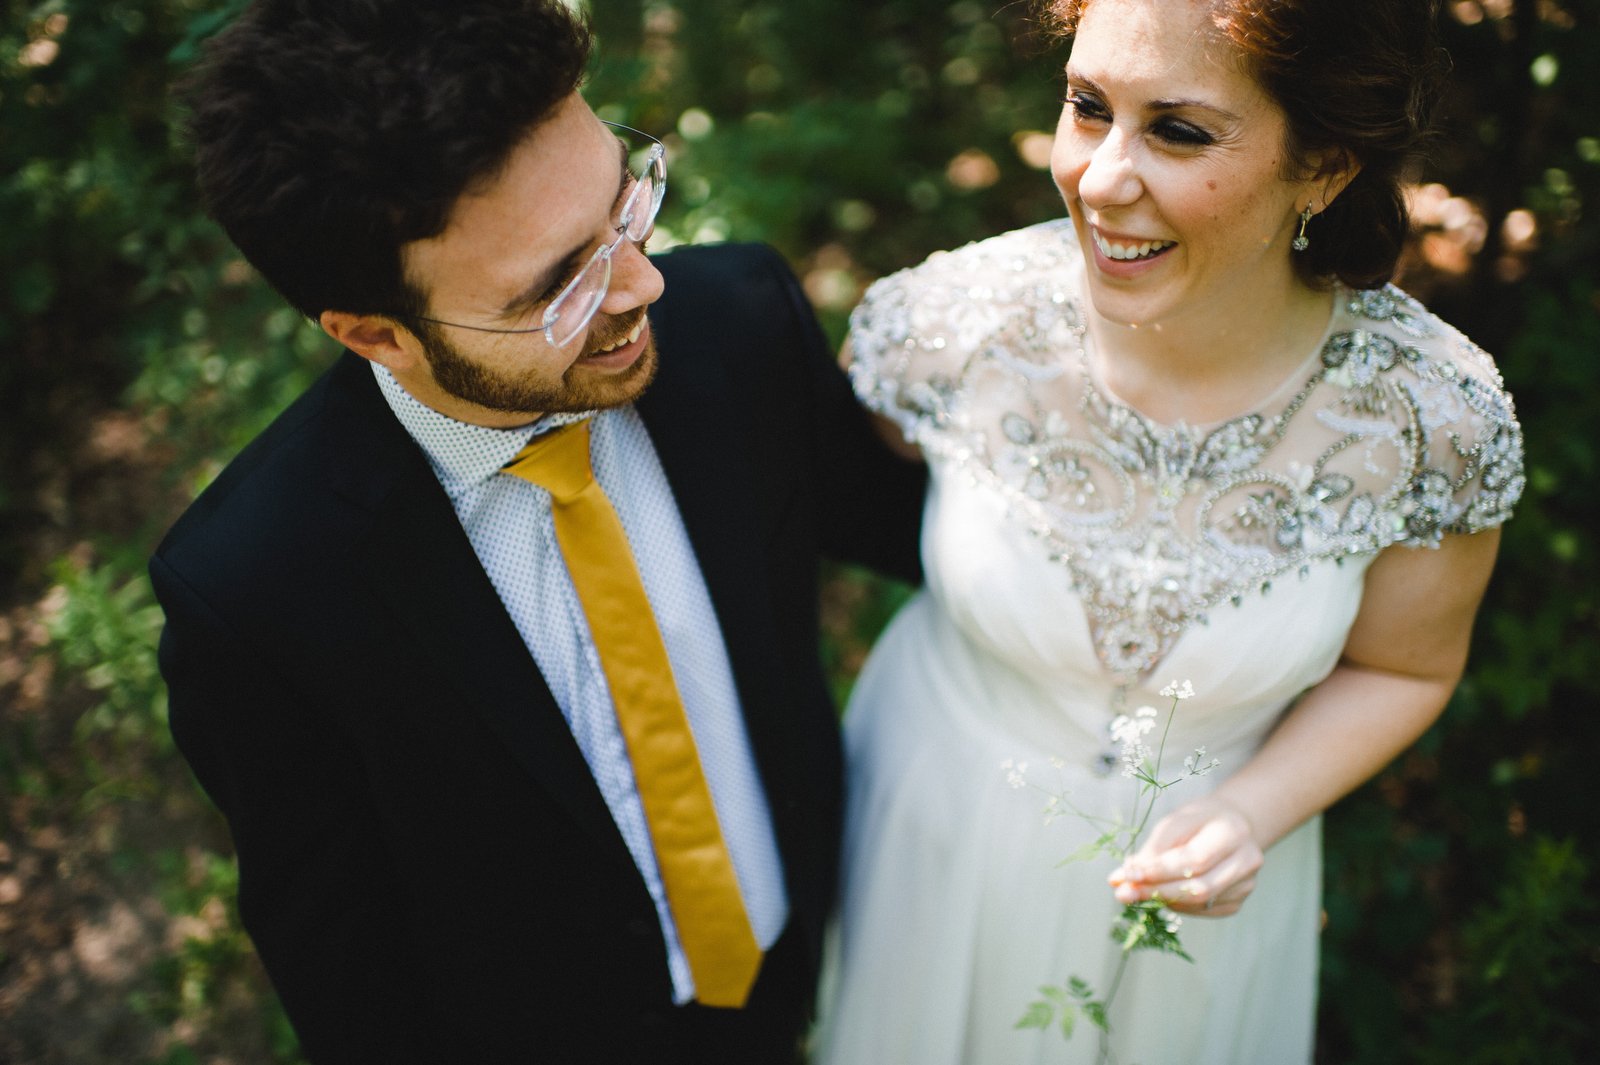 laughing in wedding photos | anna and daniel | wedding photos in high park